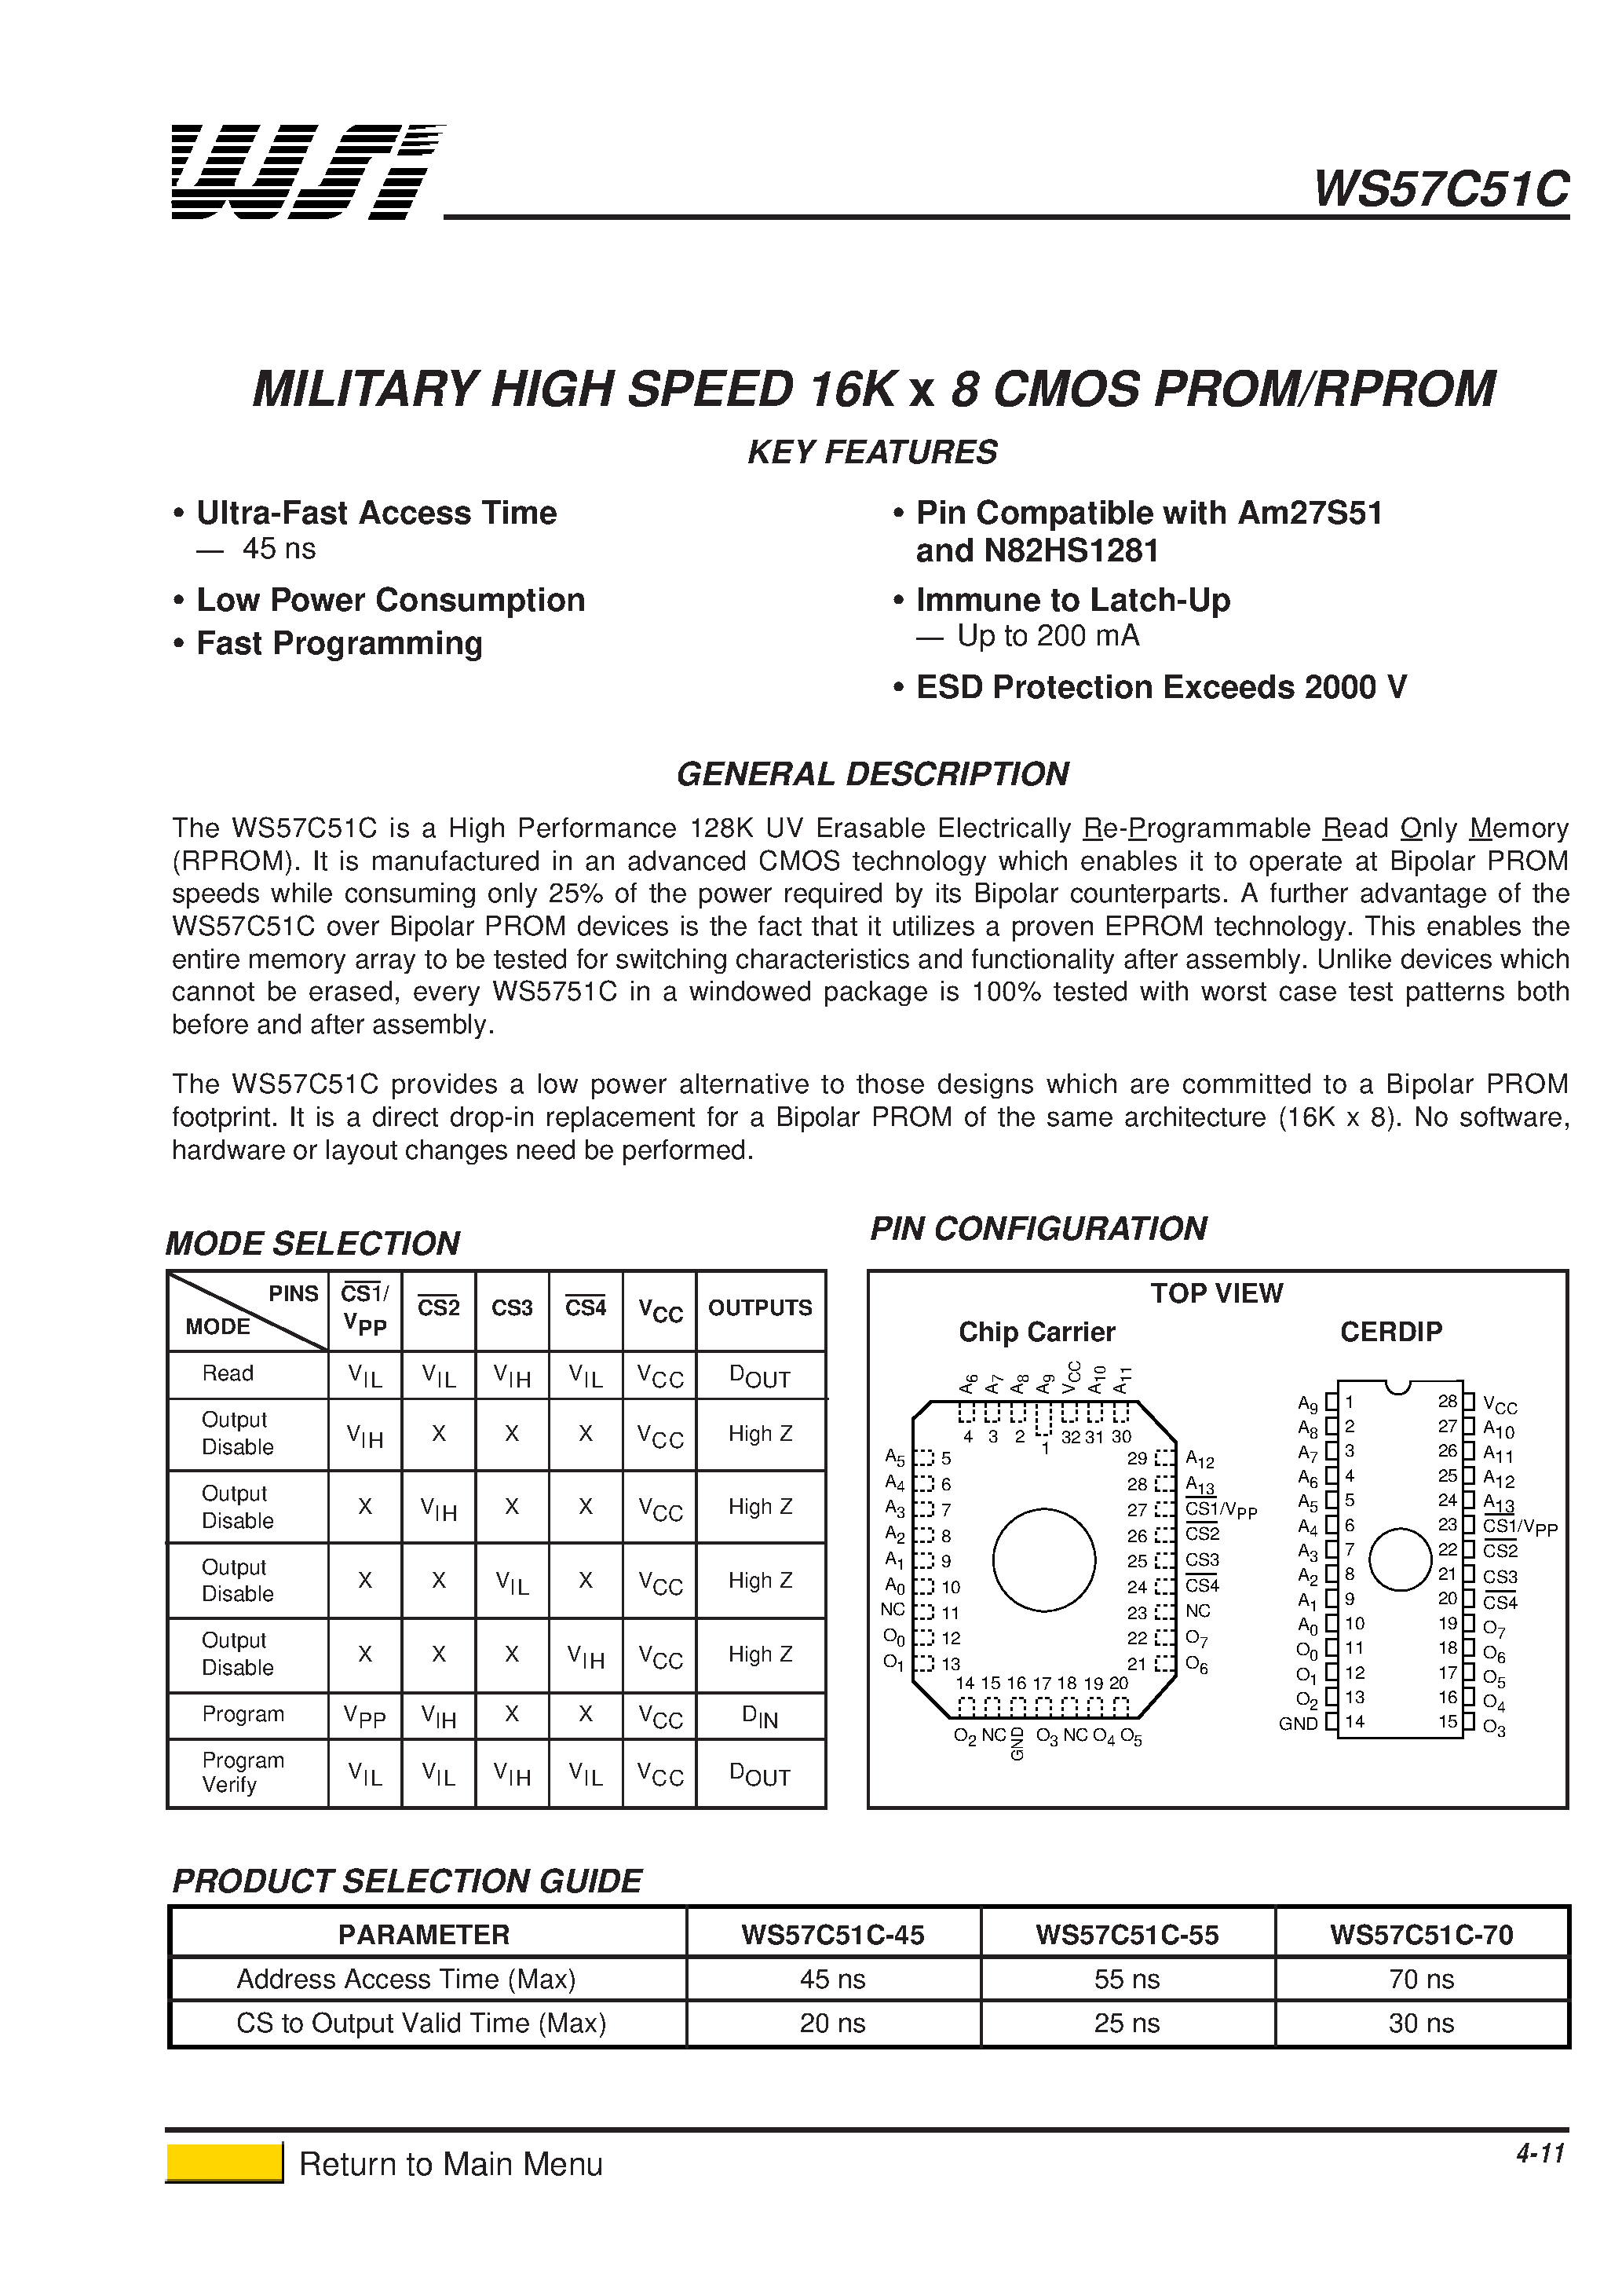 Даташит WS57C51C-55DMB - HIGH SPEED 16K x 8 CMOS PROM/RPROM страница 1